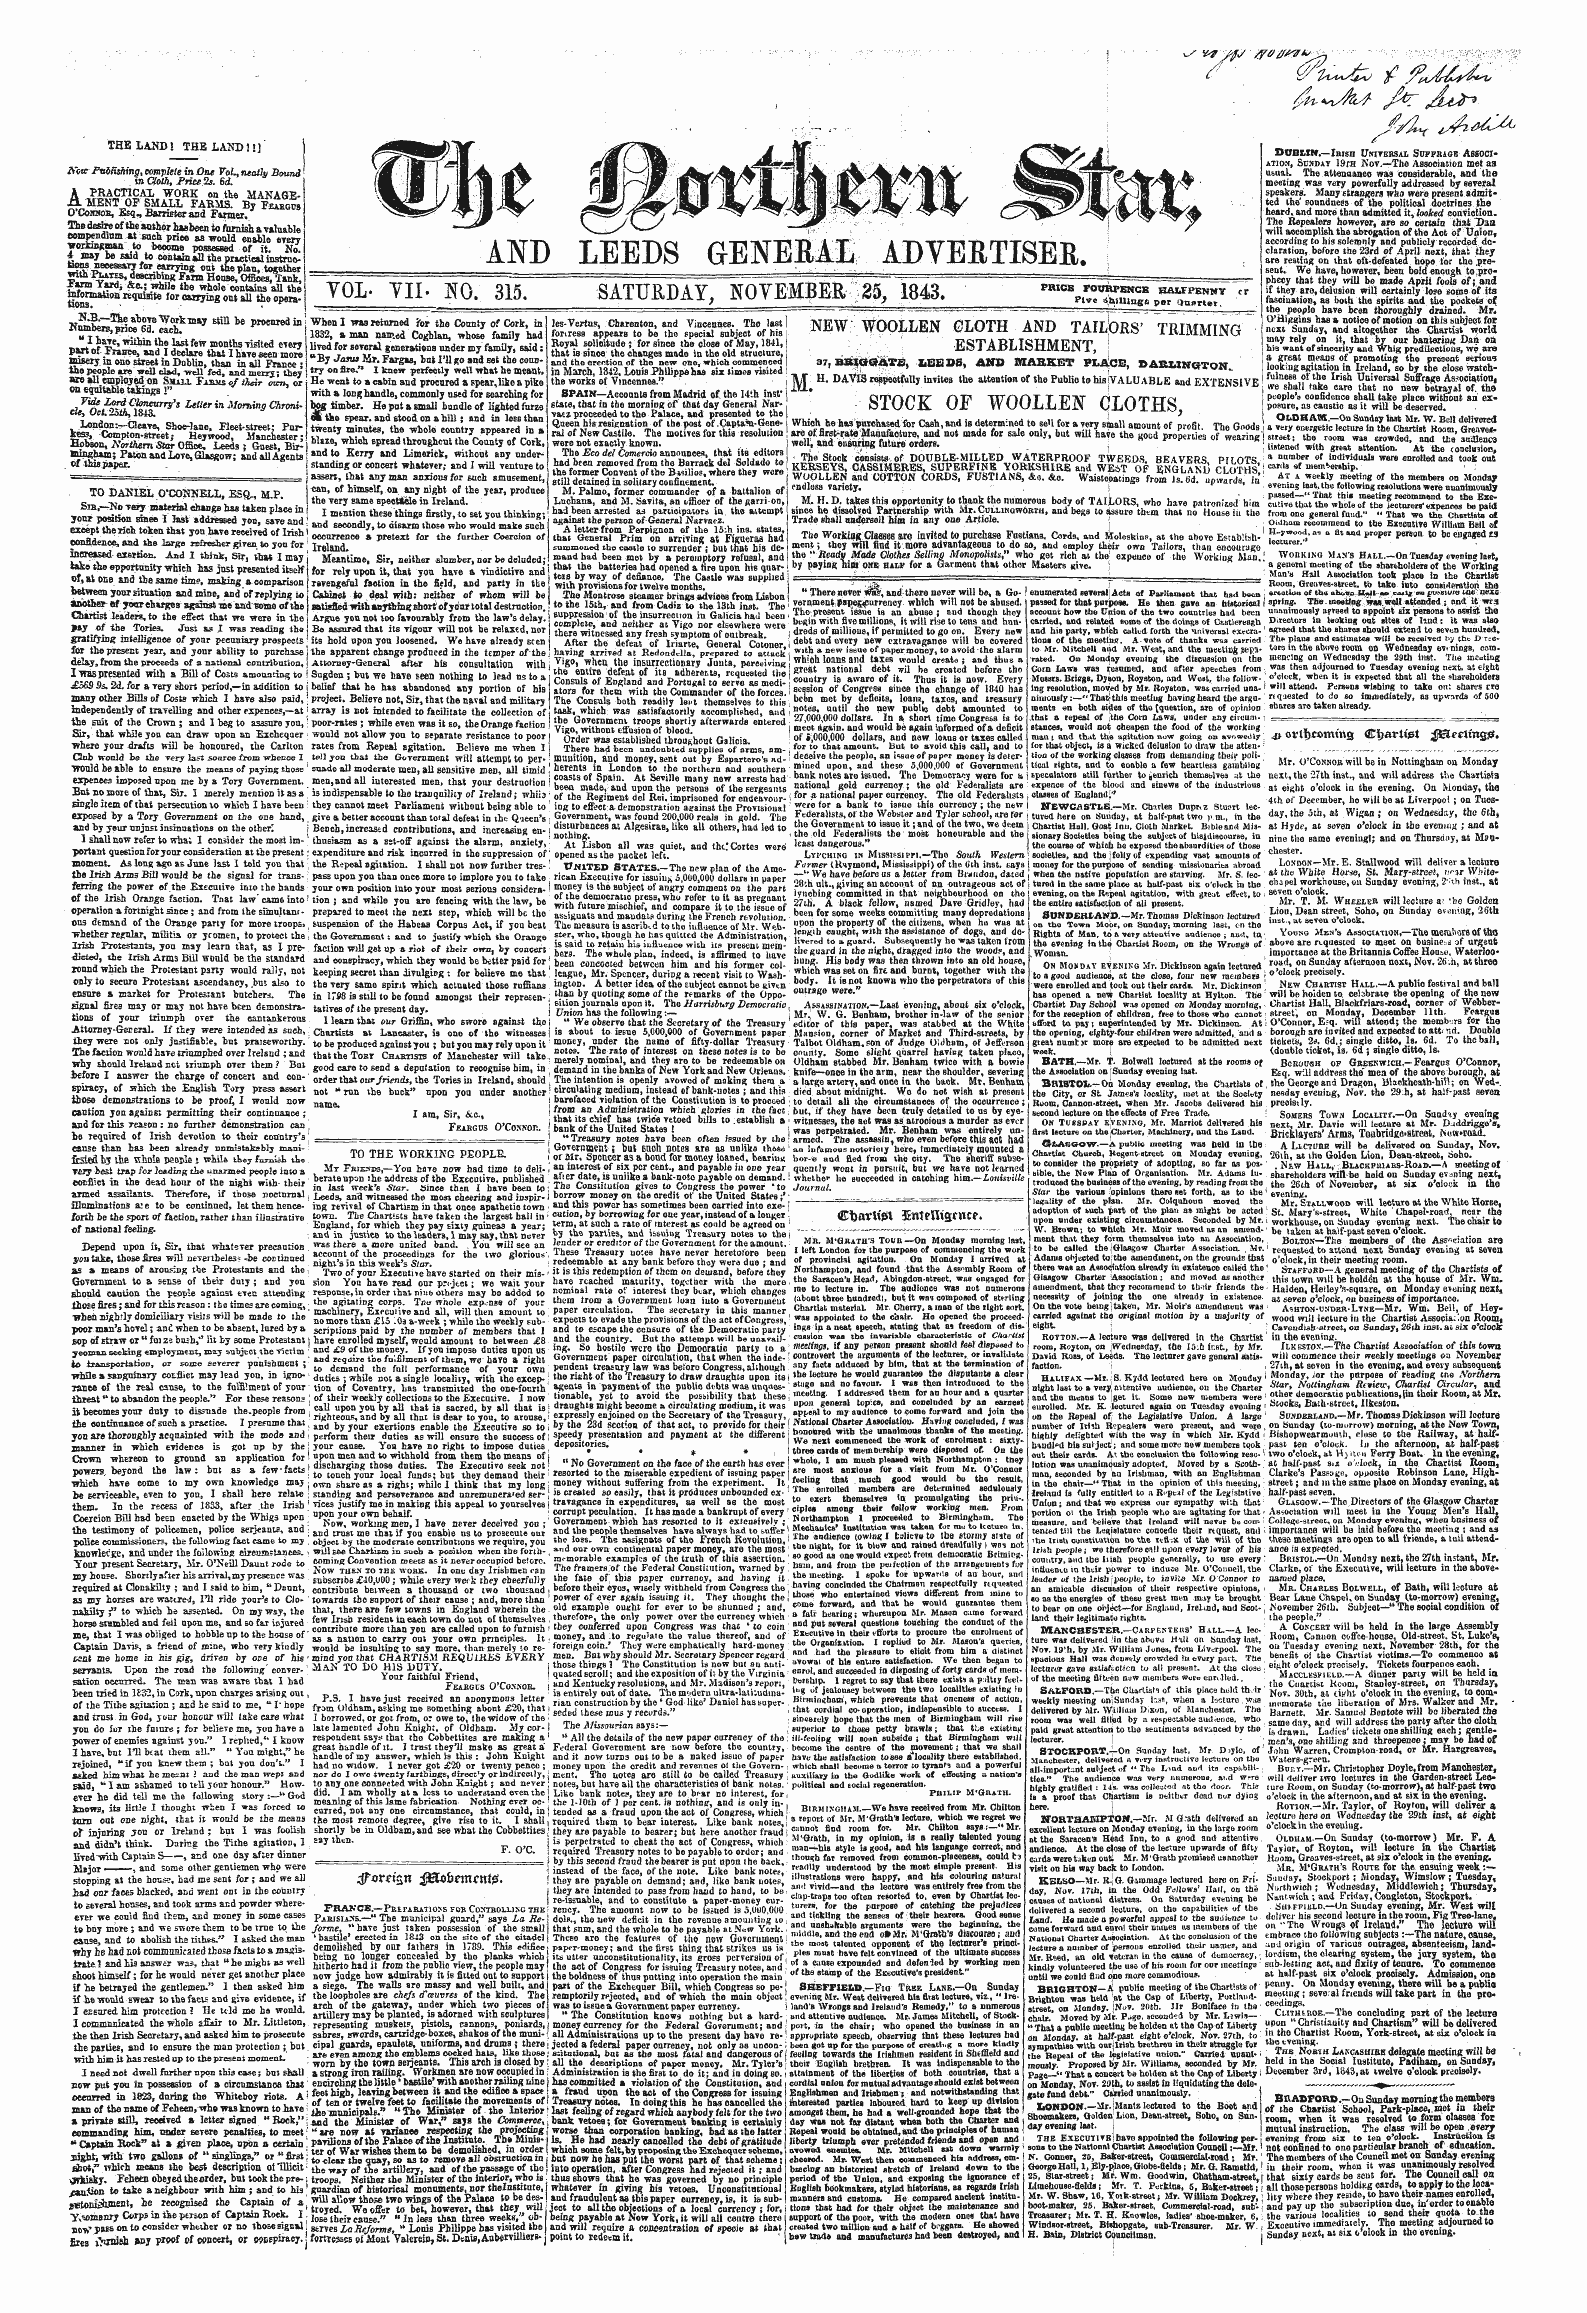 Northern Star (1837-1852): jS F Y, 2nd edition - Ct&Gt;Aft$I Entenisfncf.